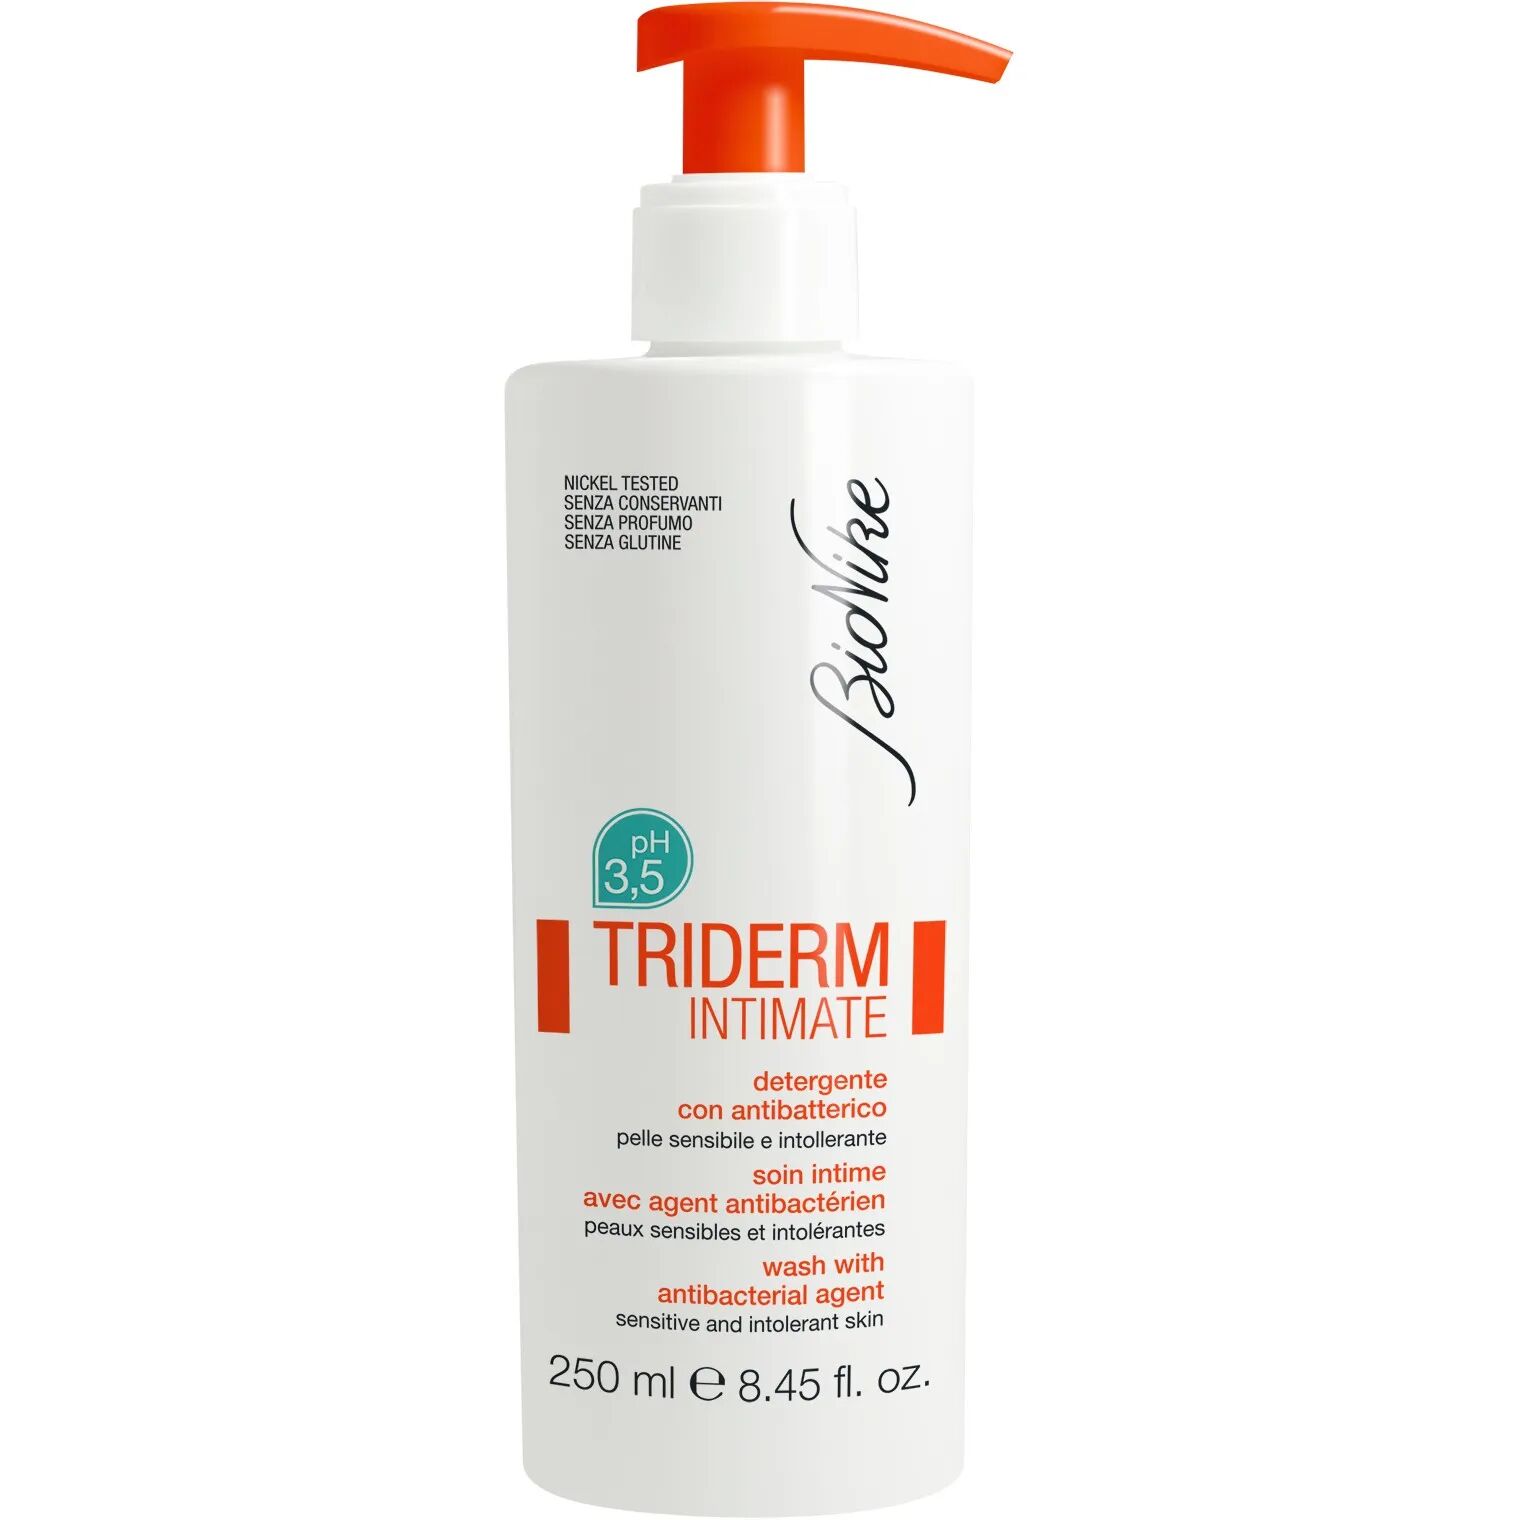 Bionike Triderm Intimate Detergente Intimo pH 3.5 Con Antibatterico PROMO 250 ml